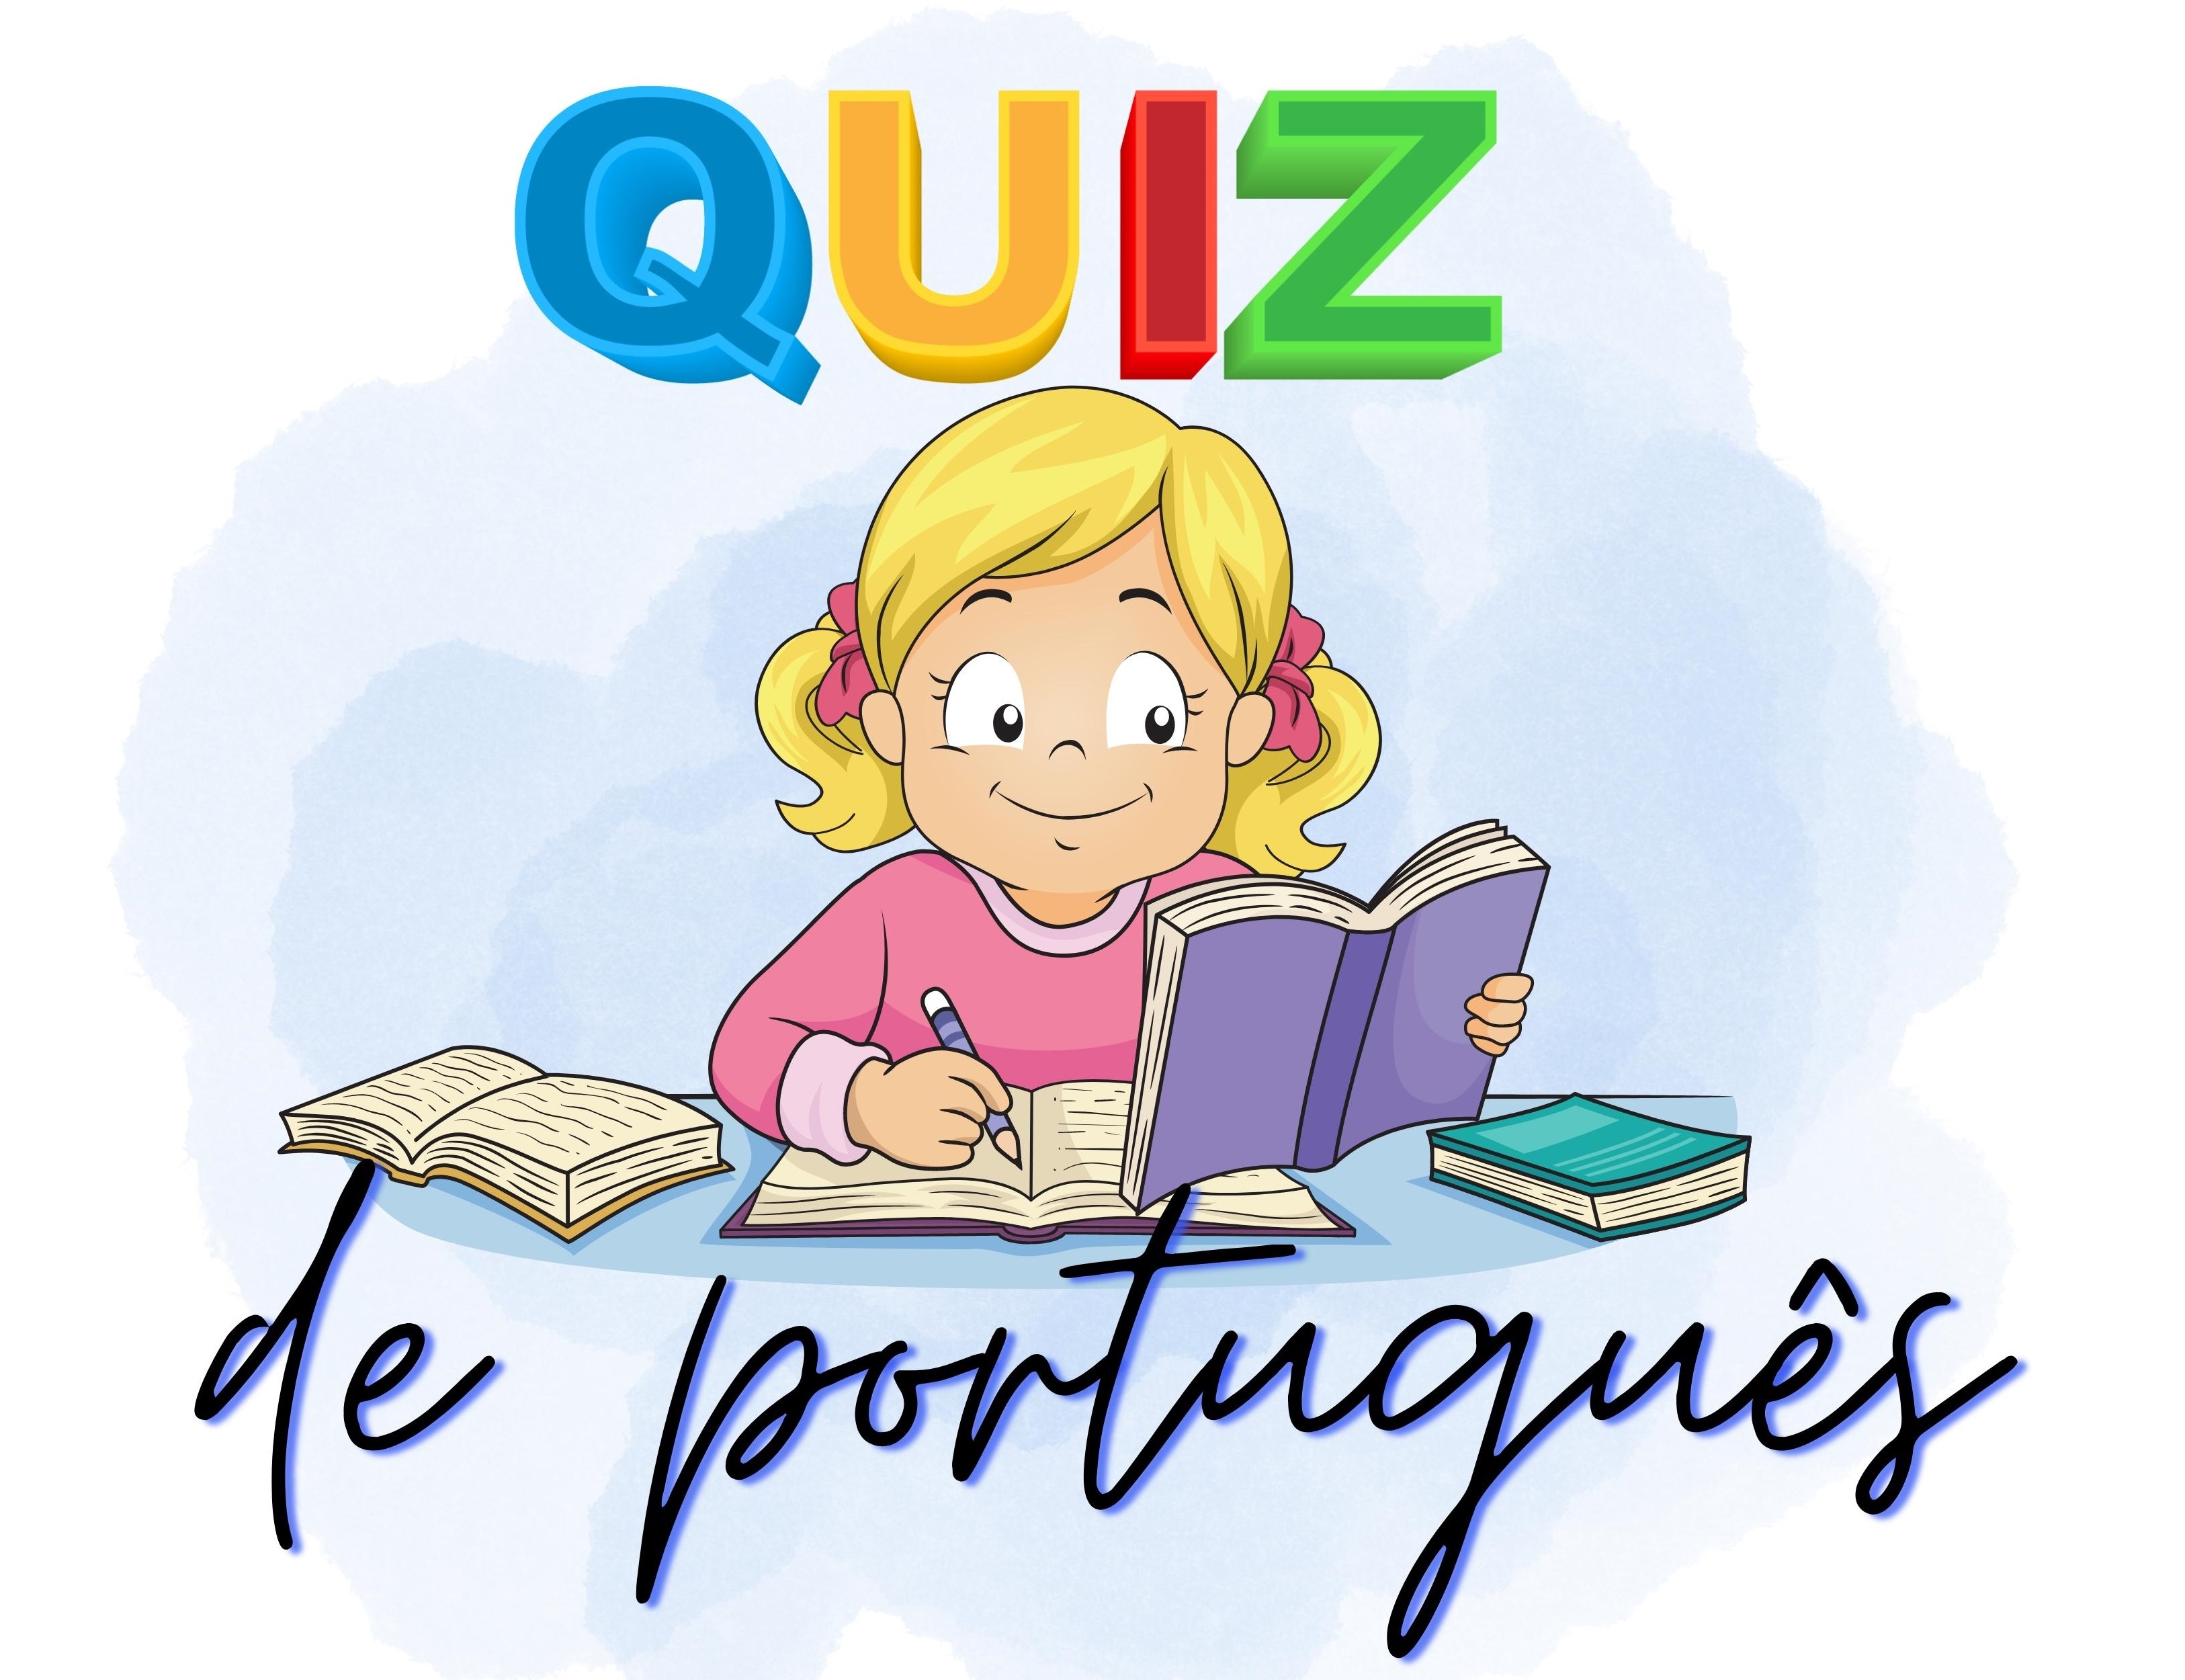 Quiz Língua Portuguesa 3 - Ensino Fundamental - 10 Perguntas 